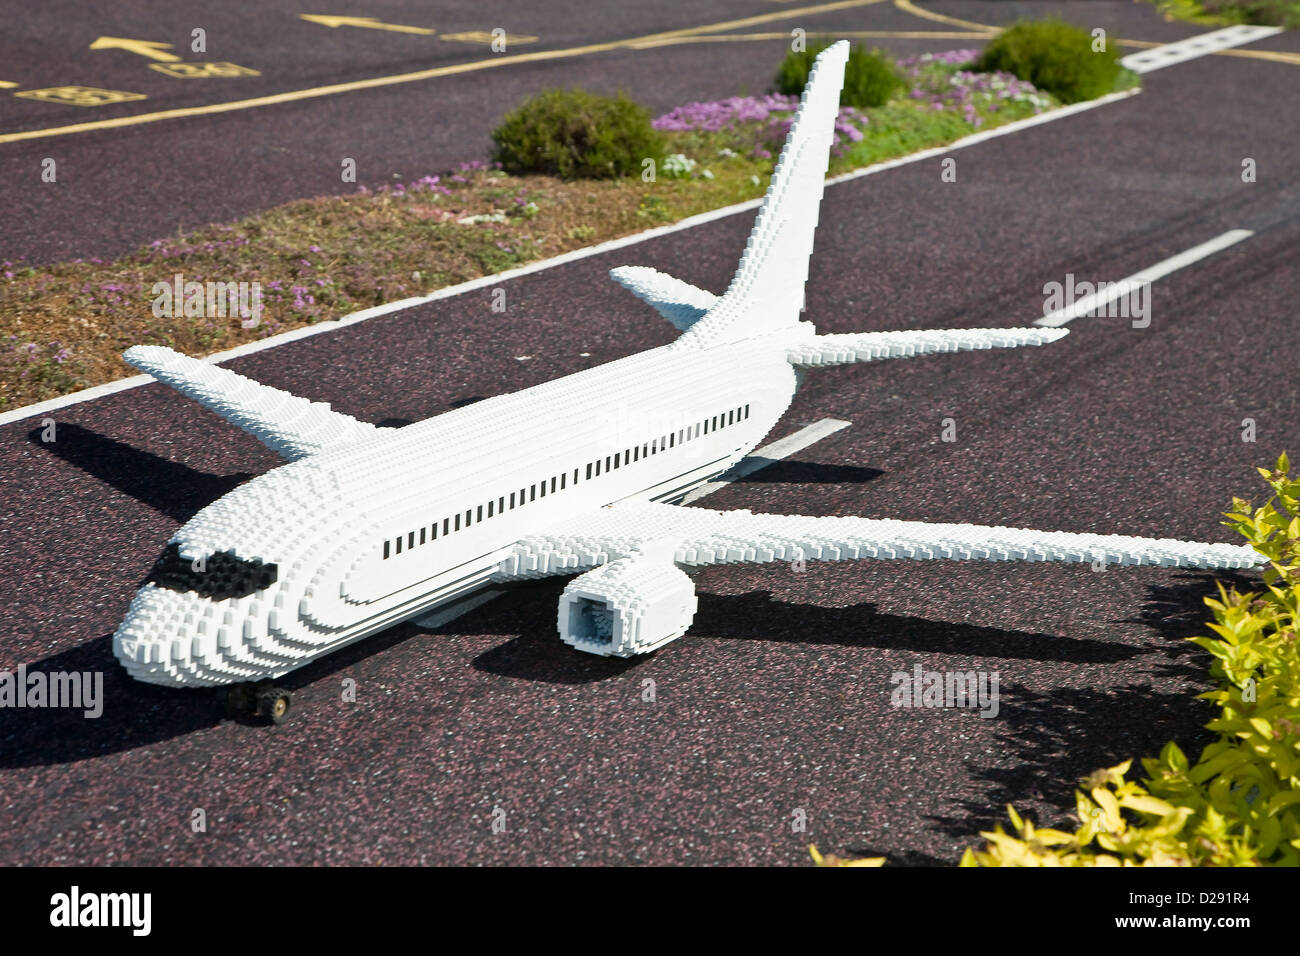 Aaircraft made from lego bricks Stock Photo